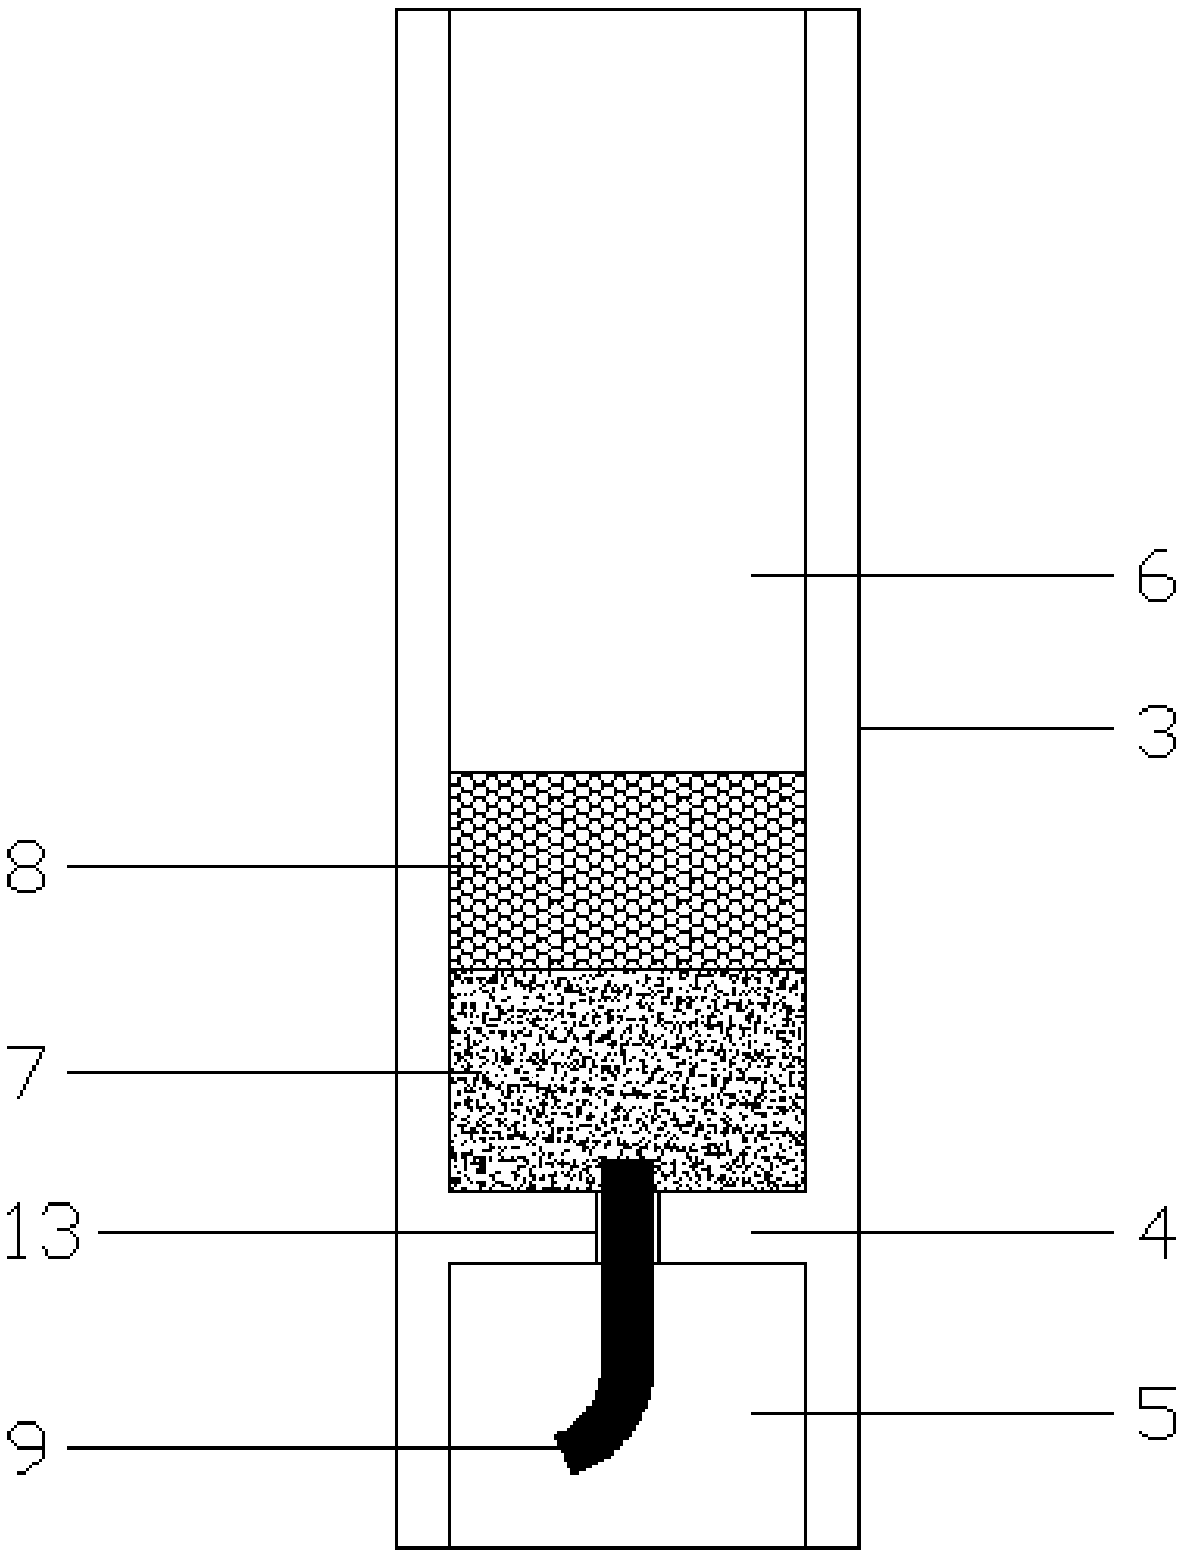 Image-text fireworks dot matrix emitter and forming mold used for manufacturing dot matrix emitter